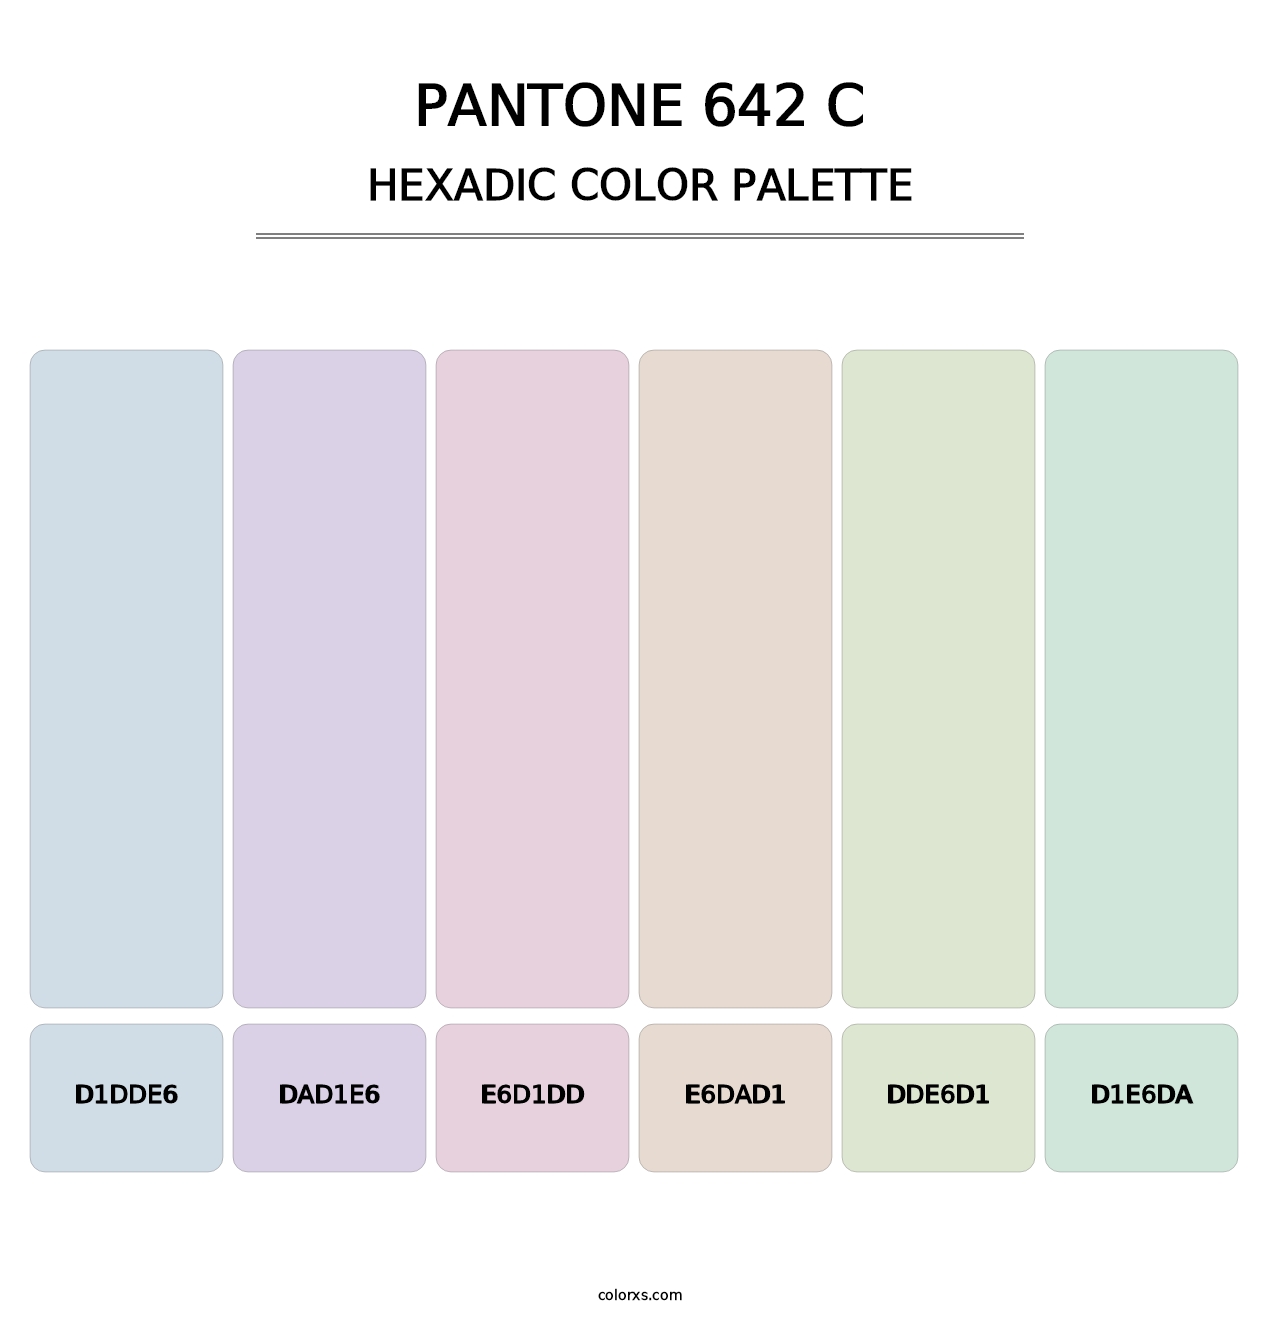 PANTONE 642 C - Hexadic Color Palette